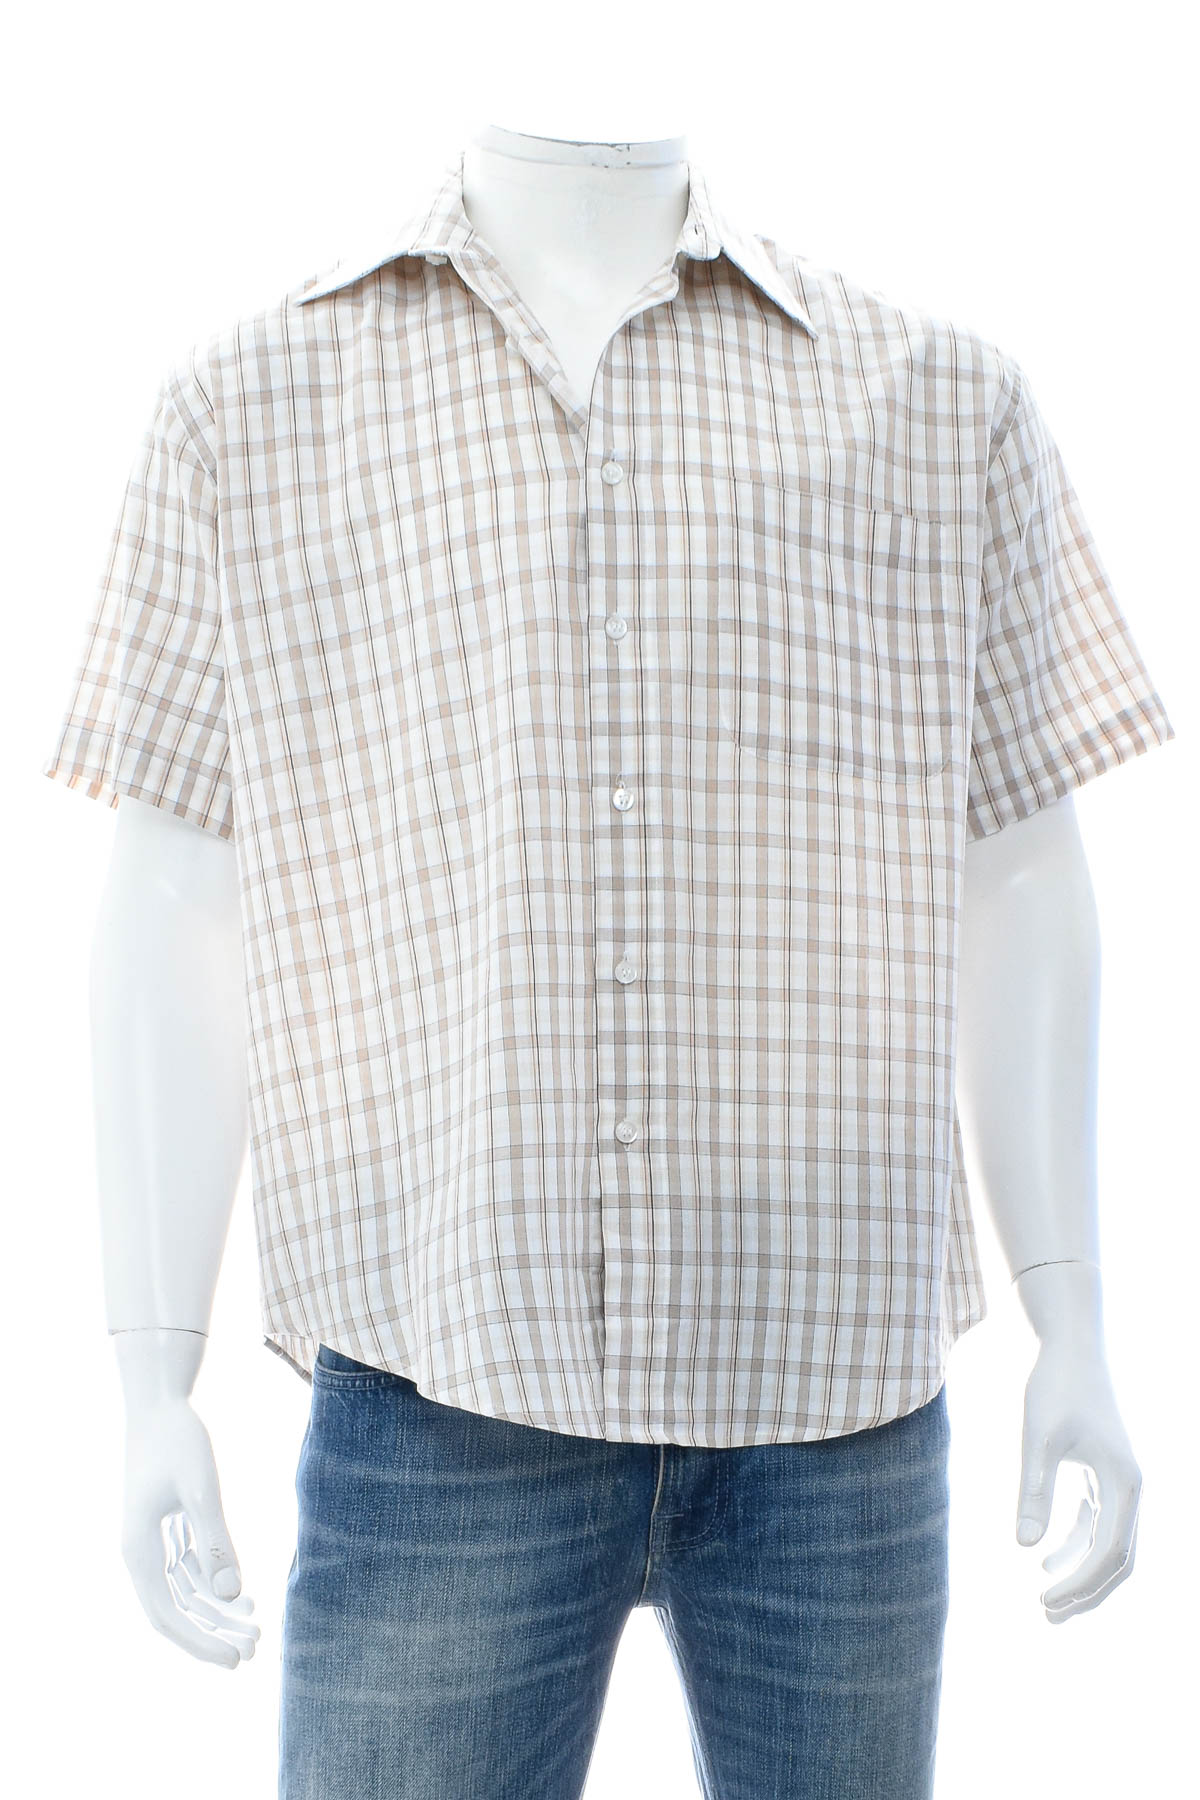 Men's shirt - MAXCLUSIV - 0